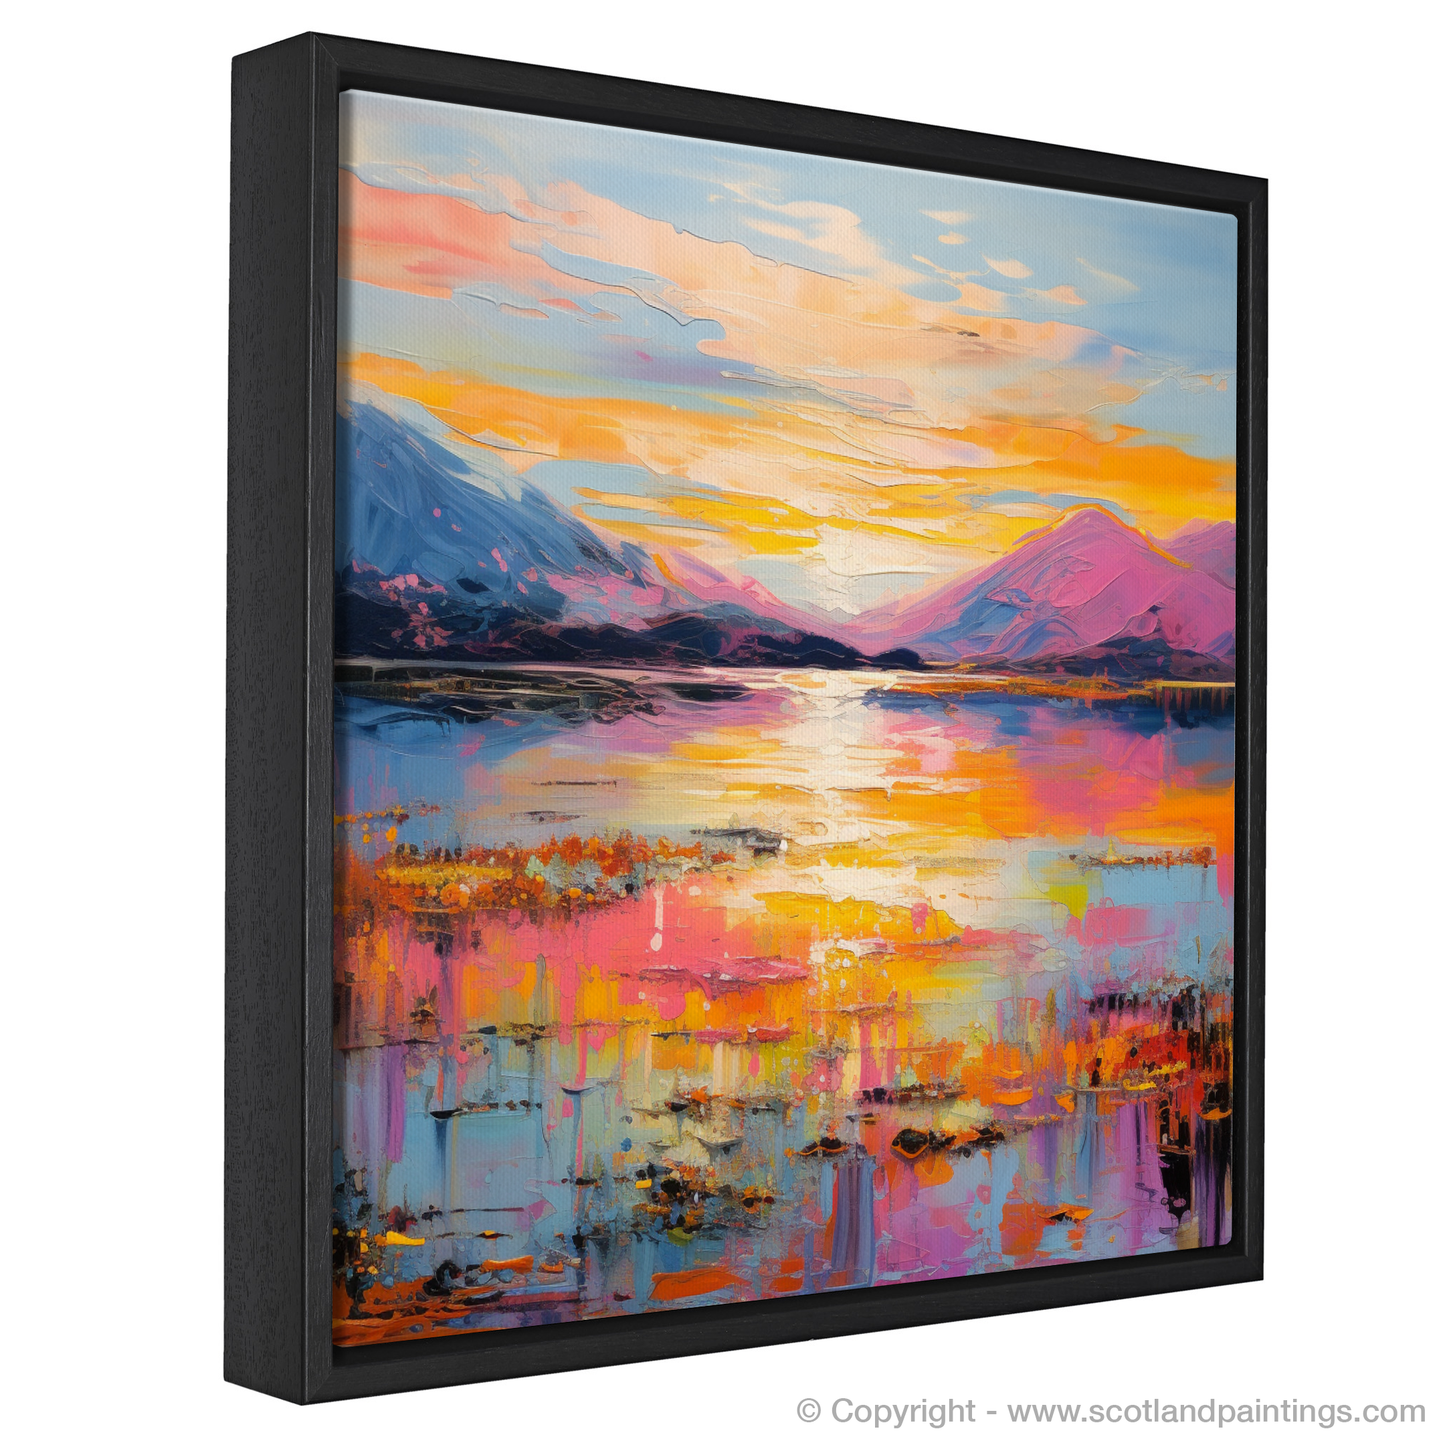 Painting and Art Print of Loch Lomond entitled "Loch Lomond's Sunset Serenade".